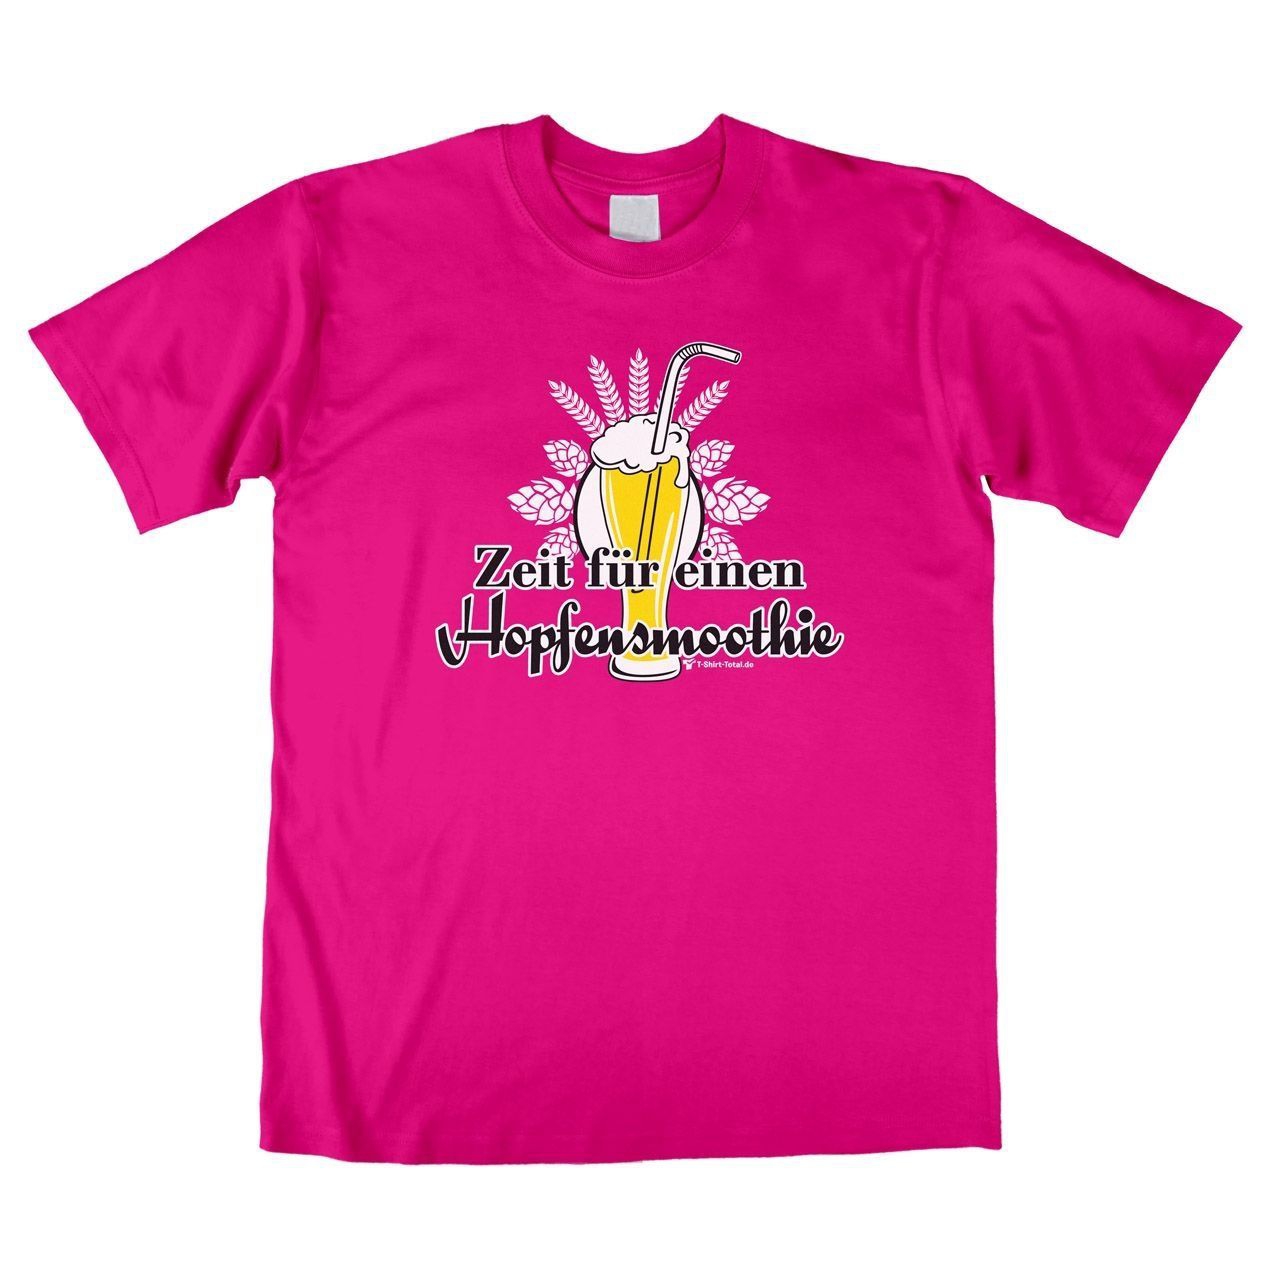 Hopfensmoothie Unisex T-Shirt pink Large